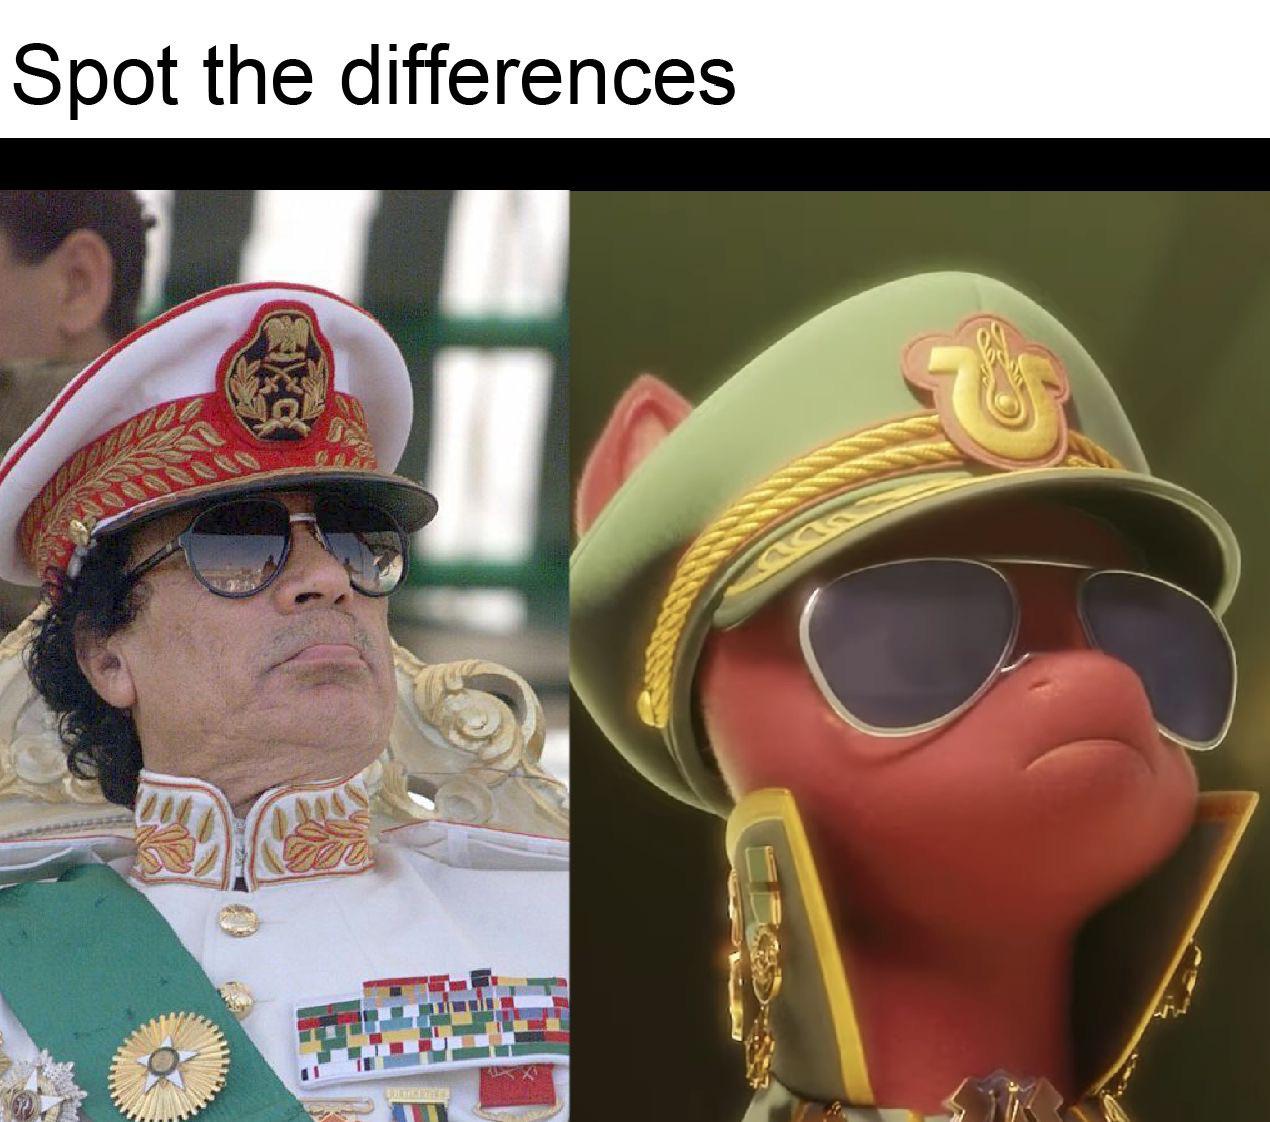 gaddafi uniform - Spot the differences